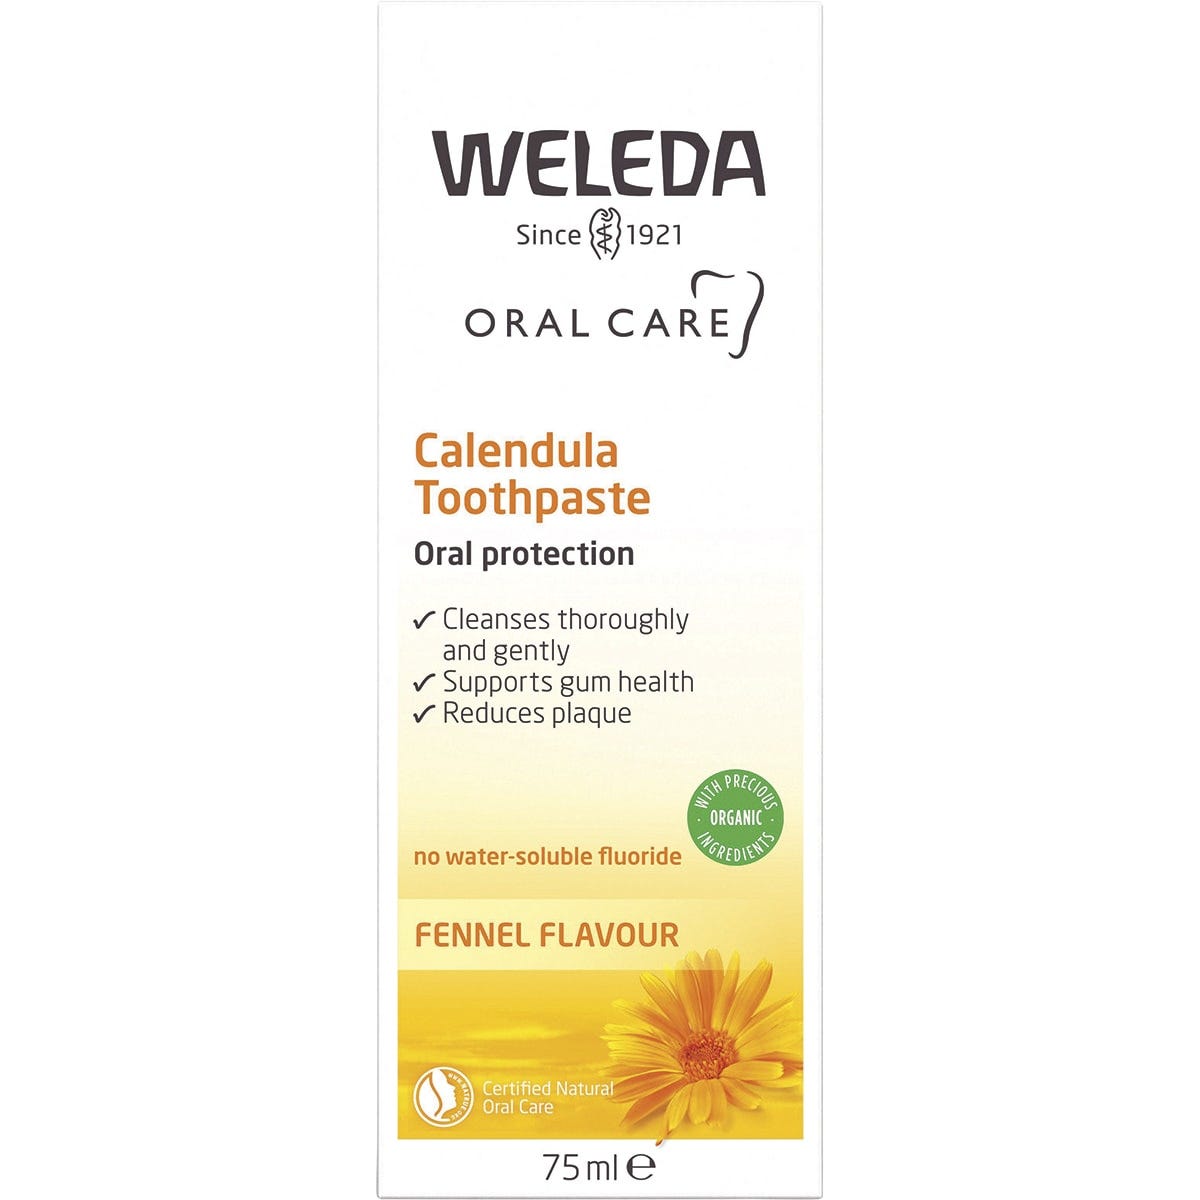 Weleda Toothpaste Calendula Fennel Flavour